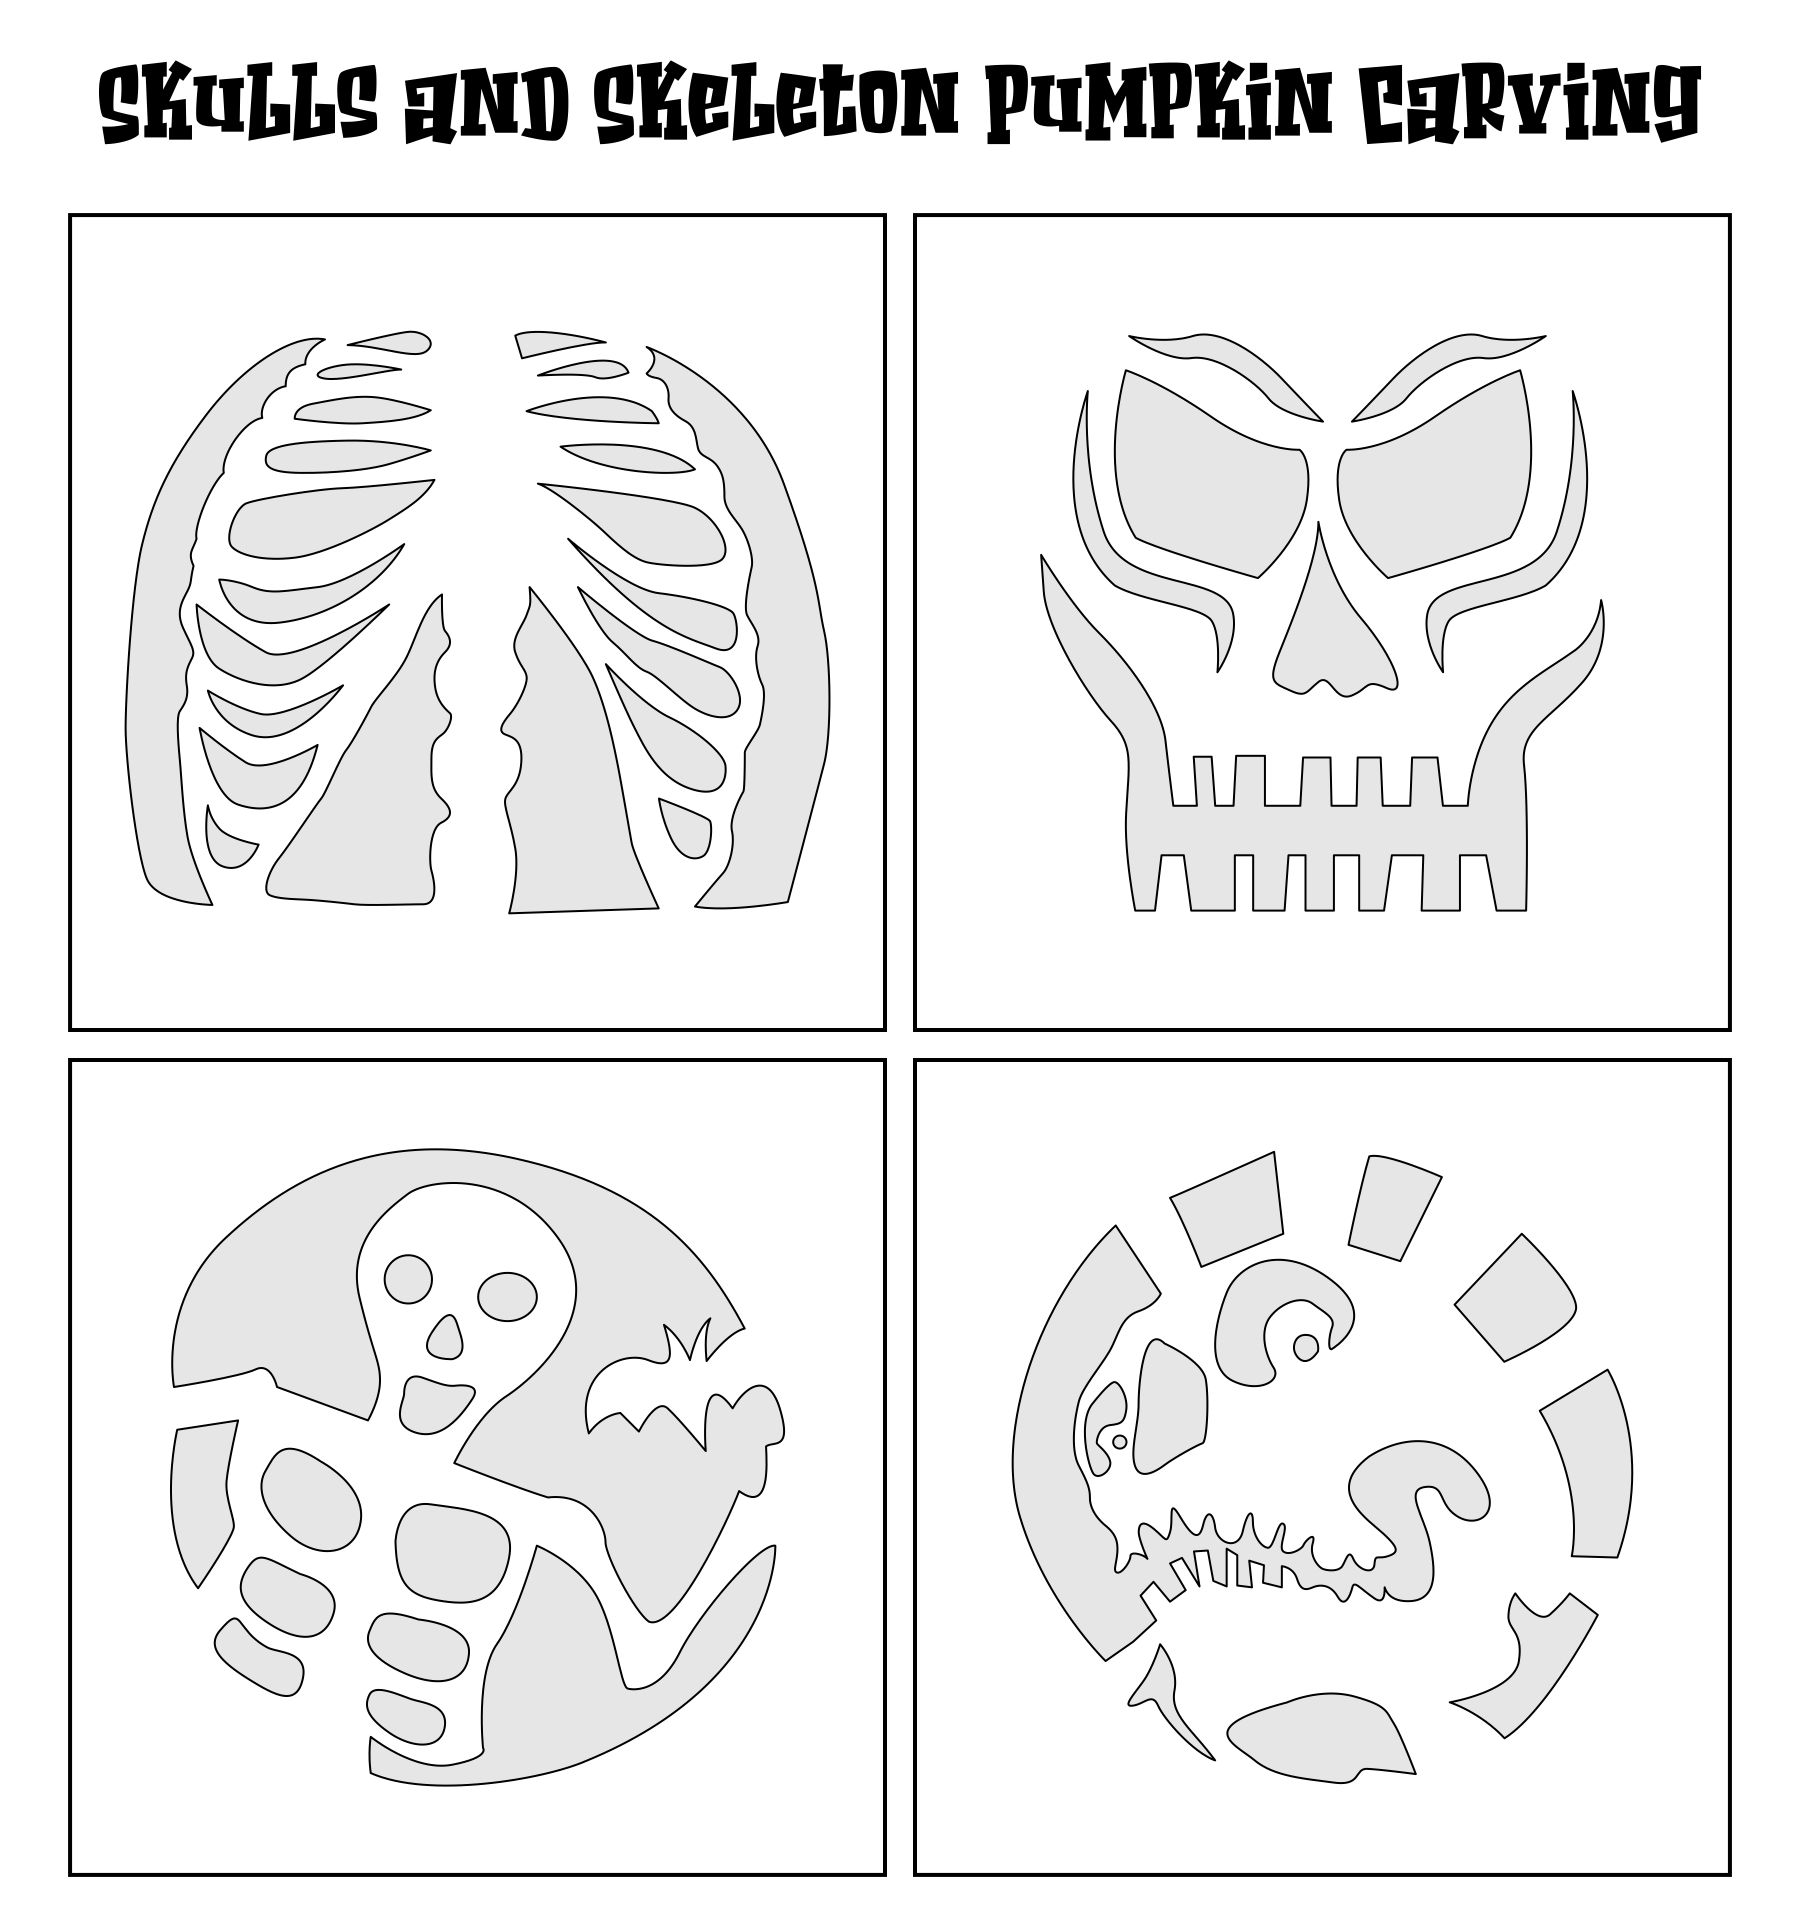 Printable Skulls And Skeleton Pumpkin Templates To Carve